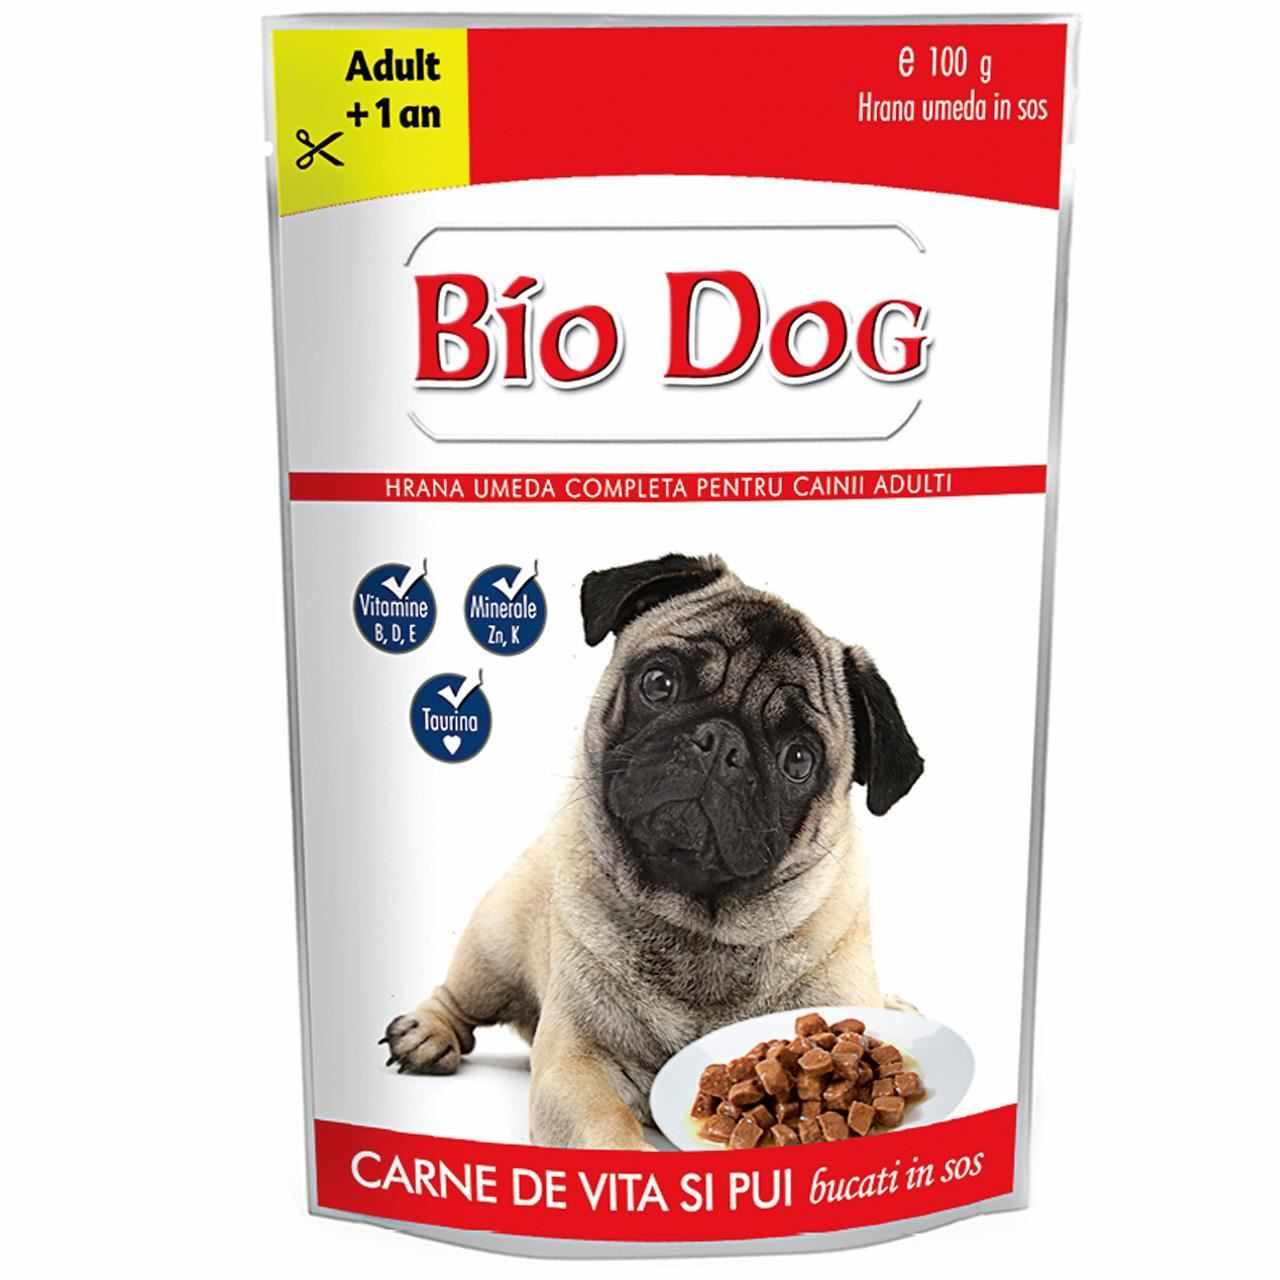 Hrana umeda pentru caini Biodog, plic pui si vita in sos 100 g